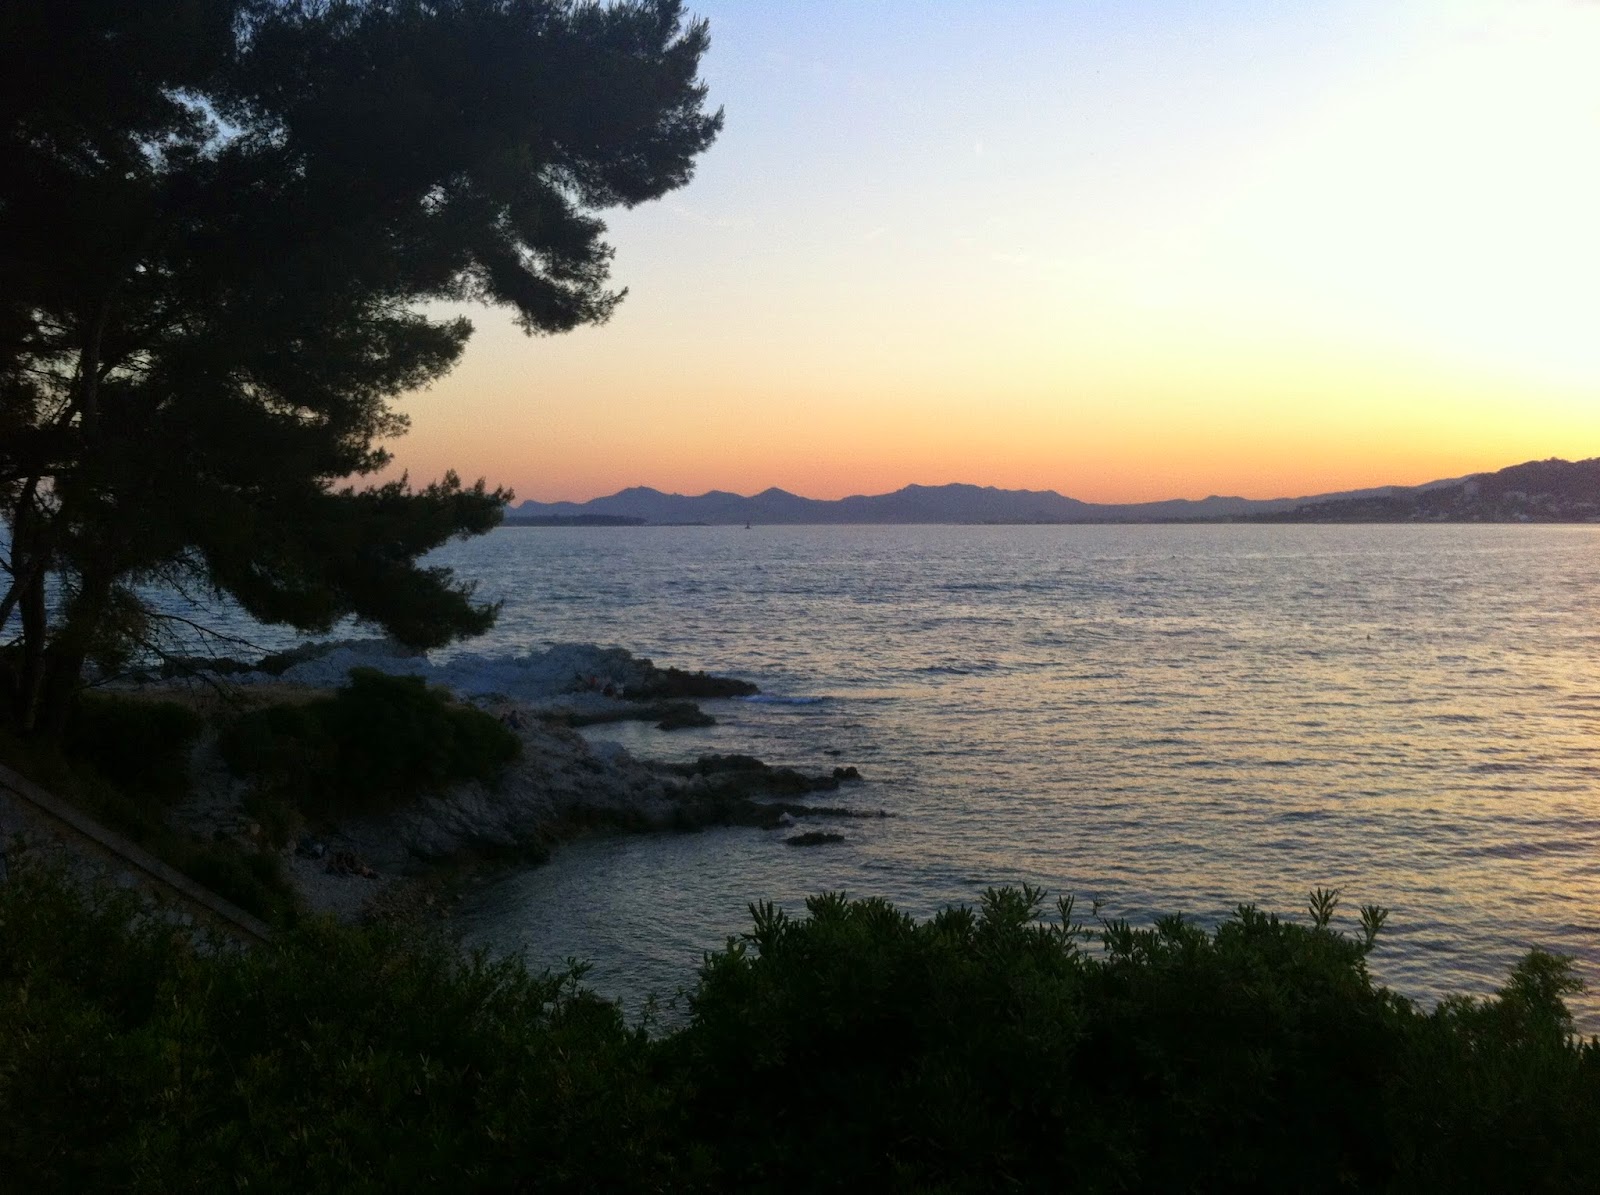 Sunset on the Côte d'Azur